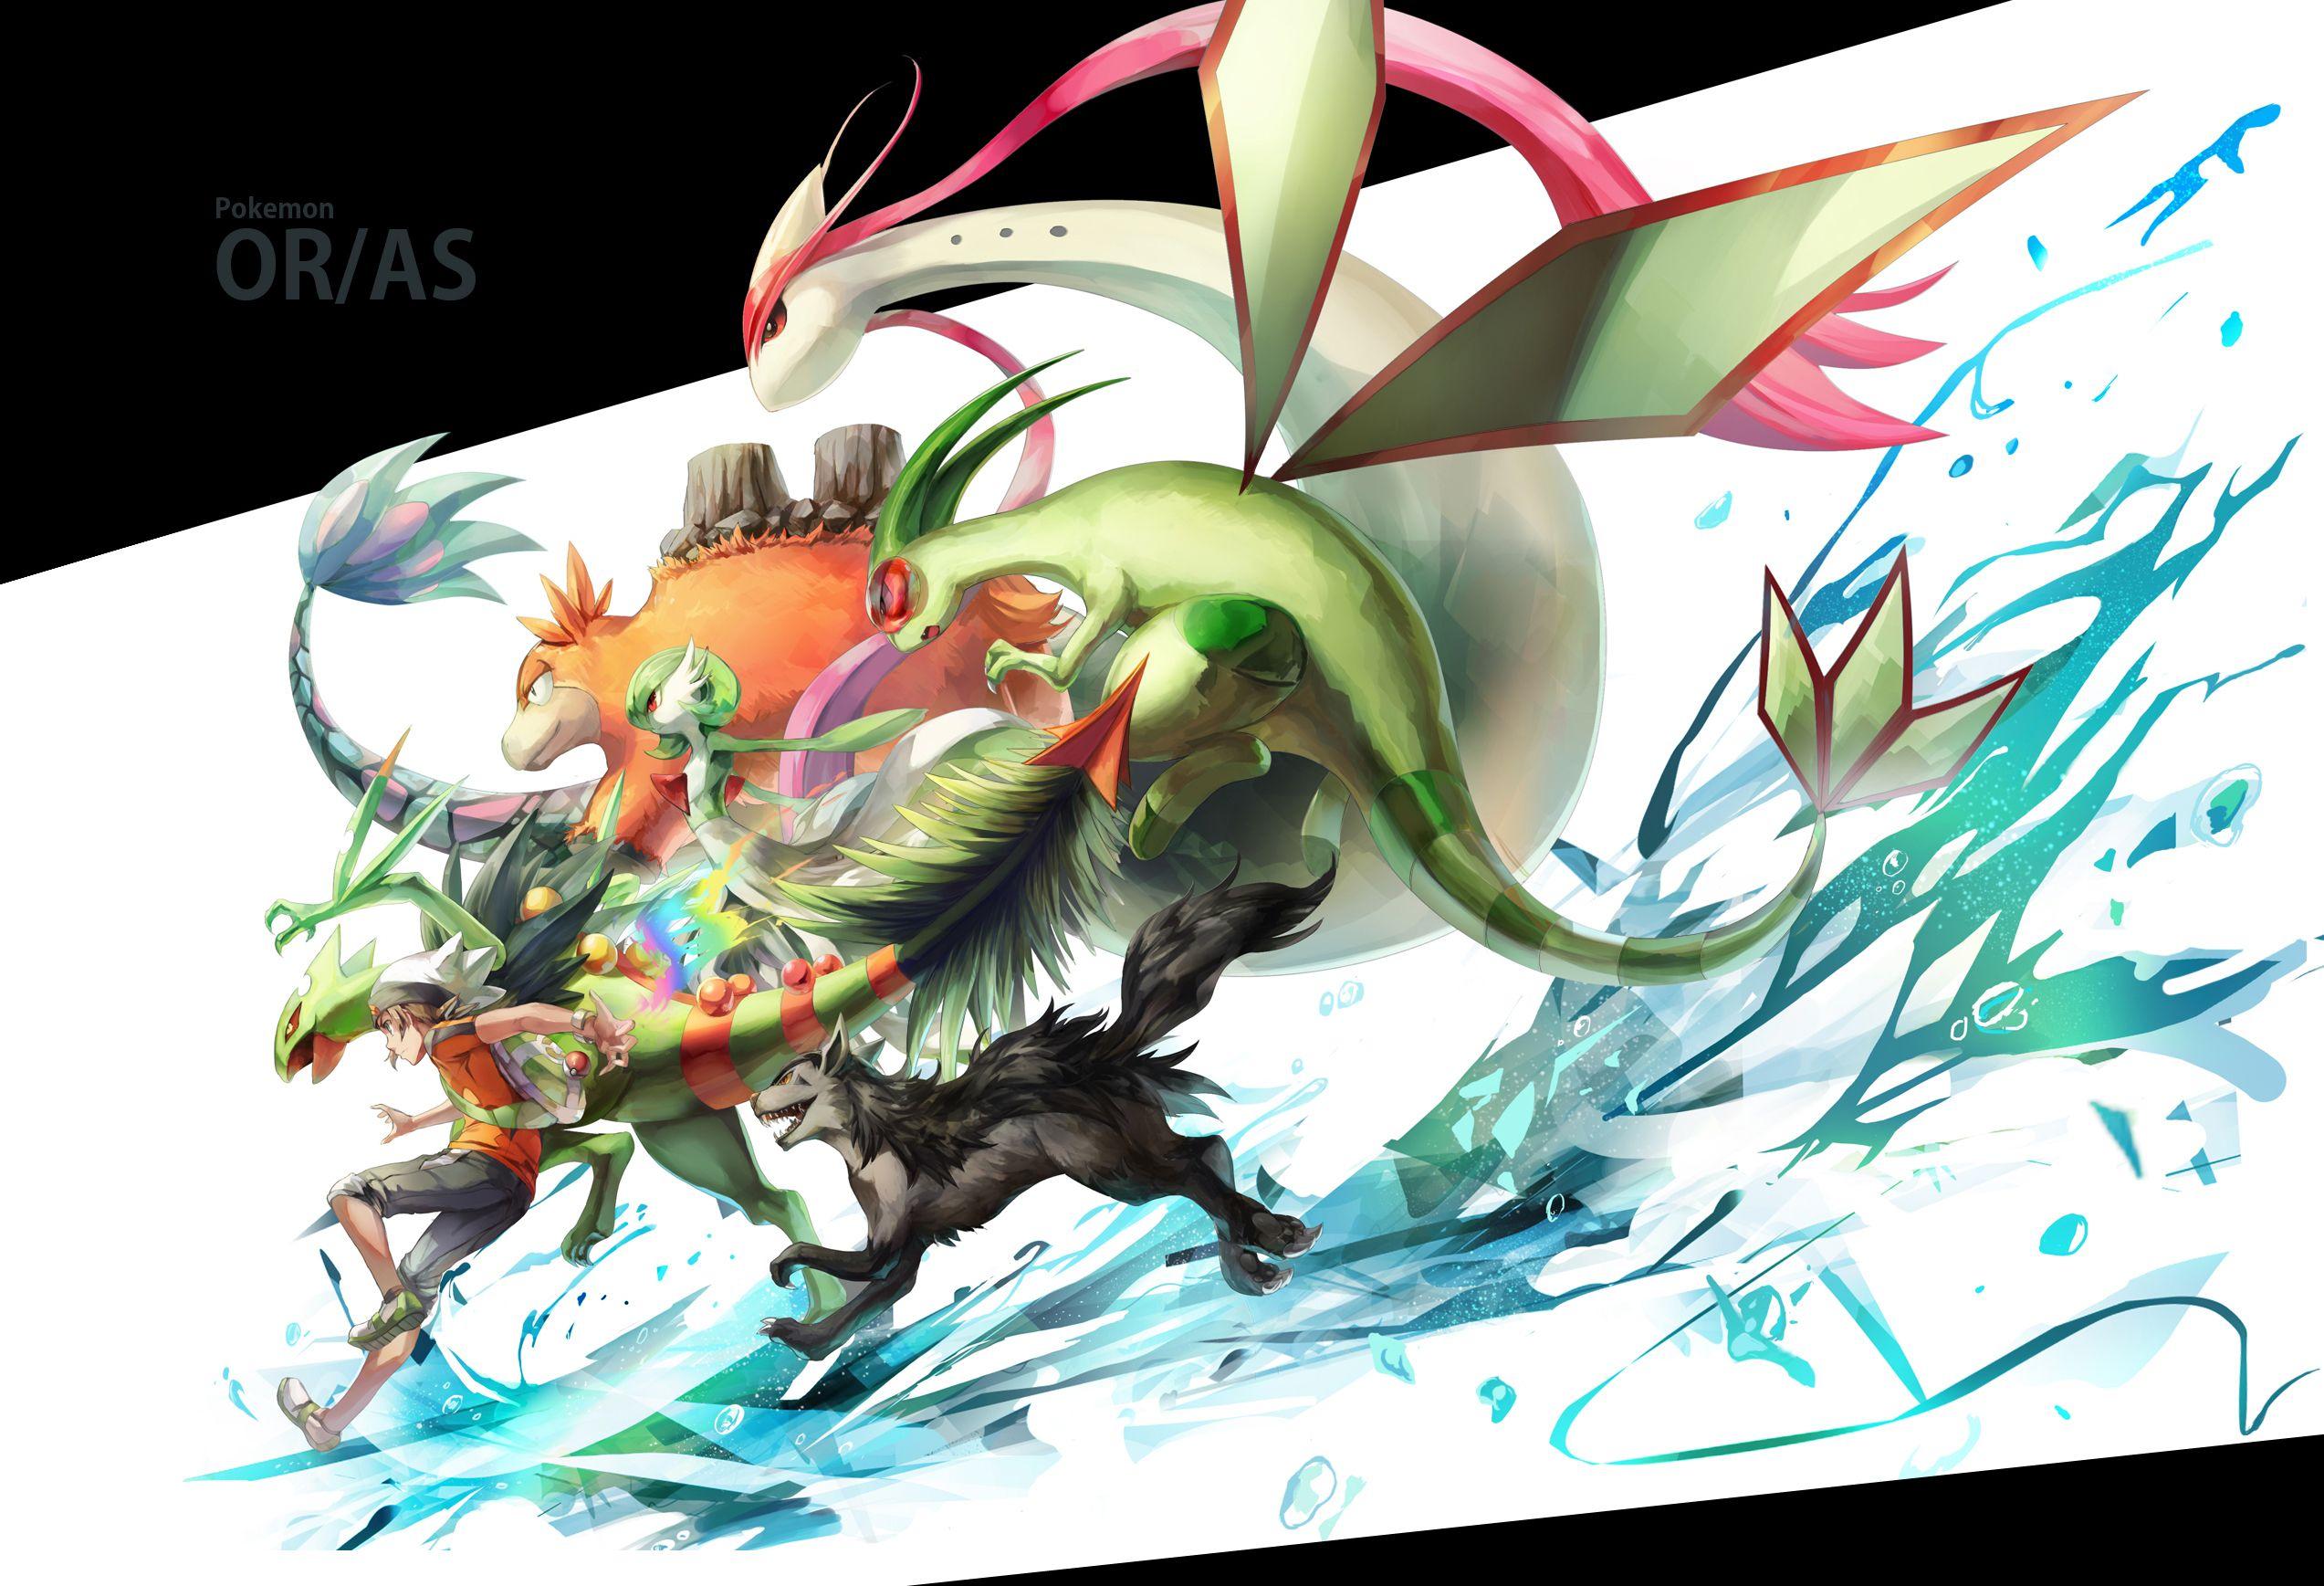 Camerupt (Pokémon) HD Wallpaper and Background Image